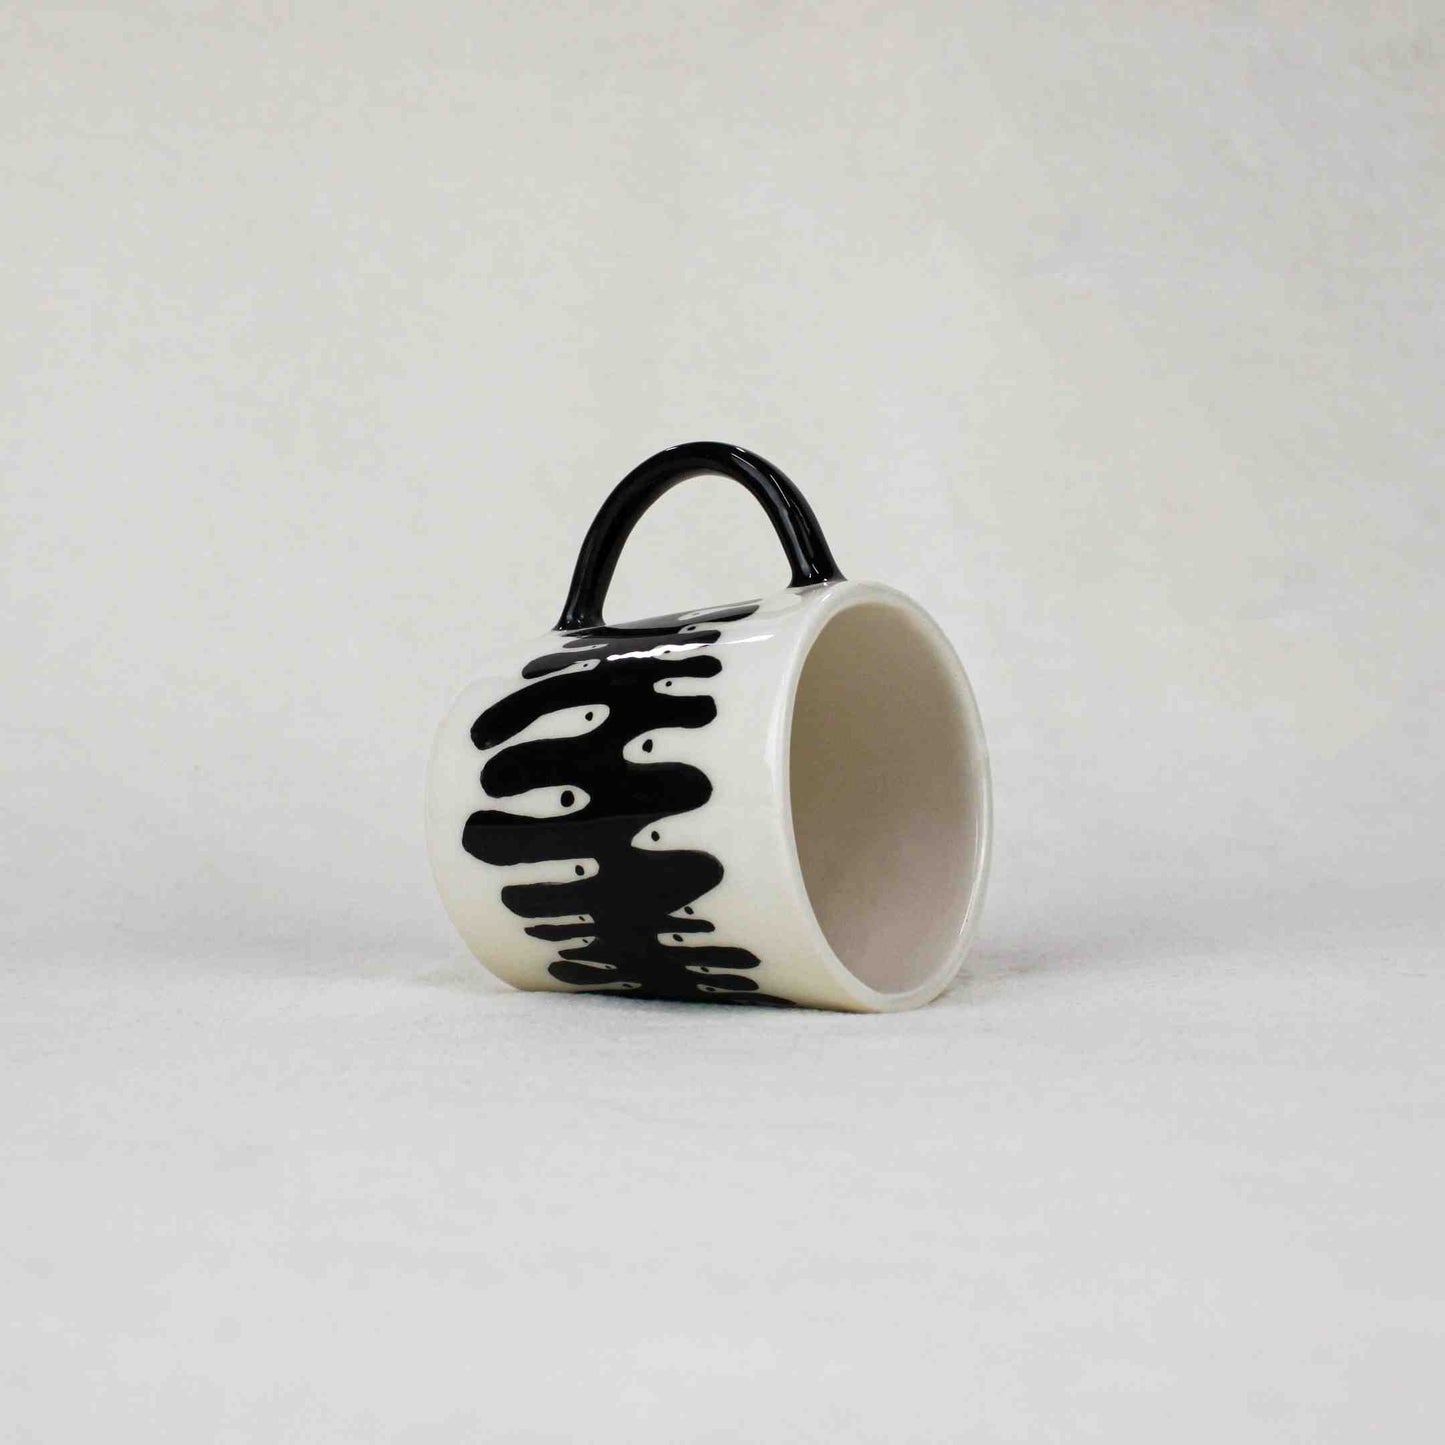 "Ink" Small Ceramic Mug, Design Ceramic Kitchenware